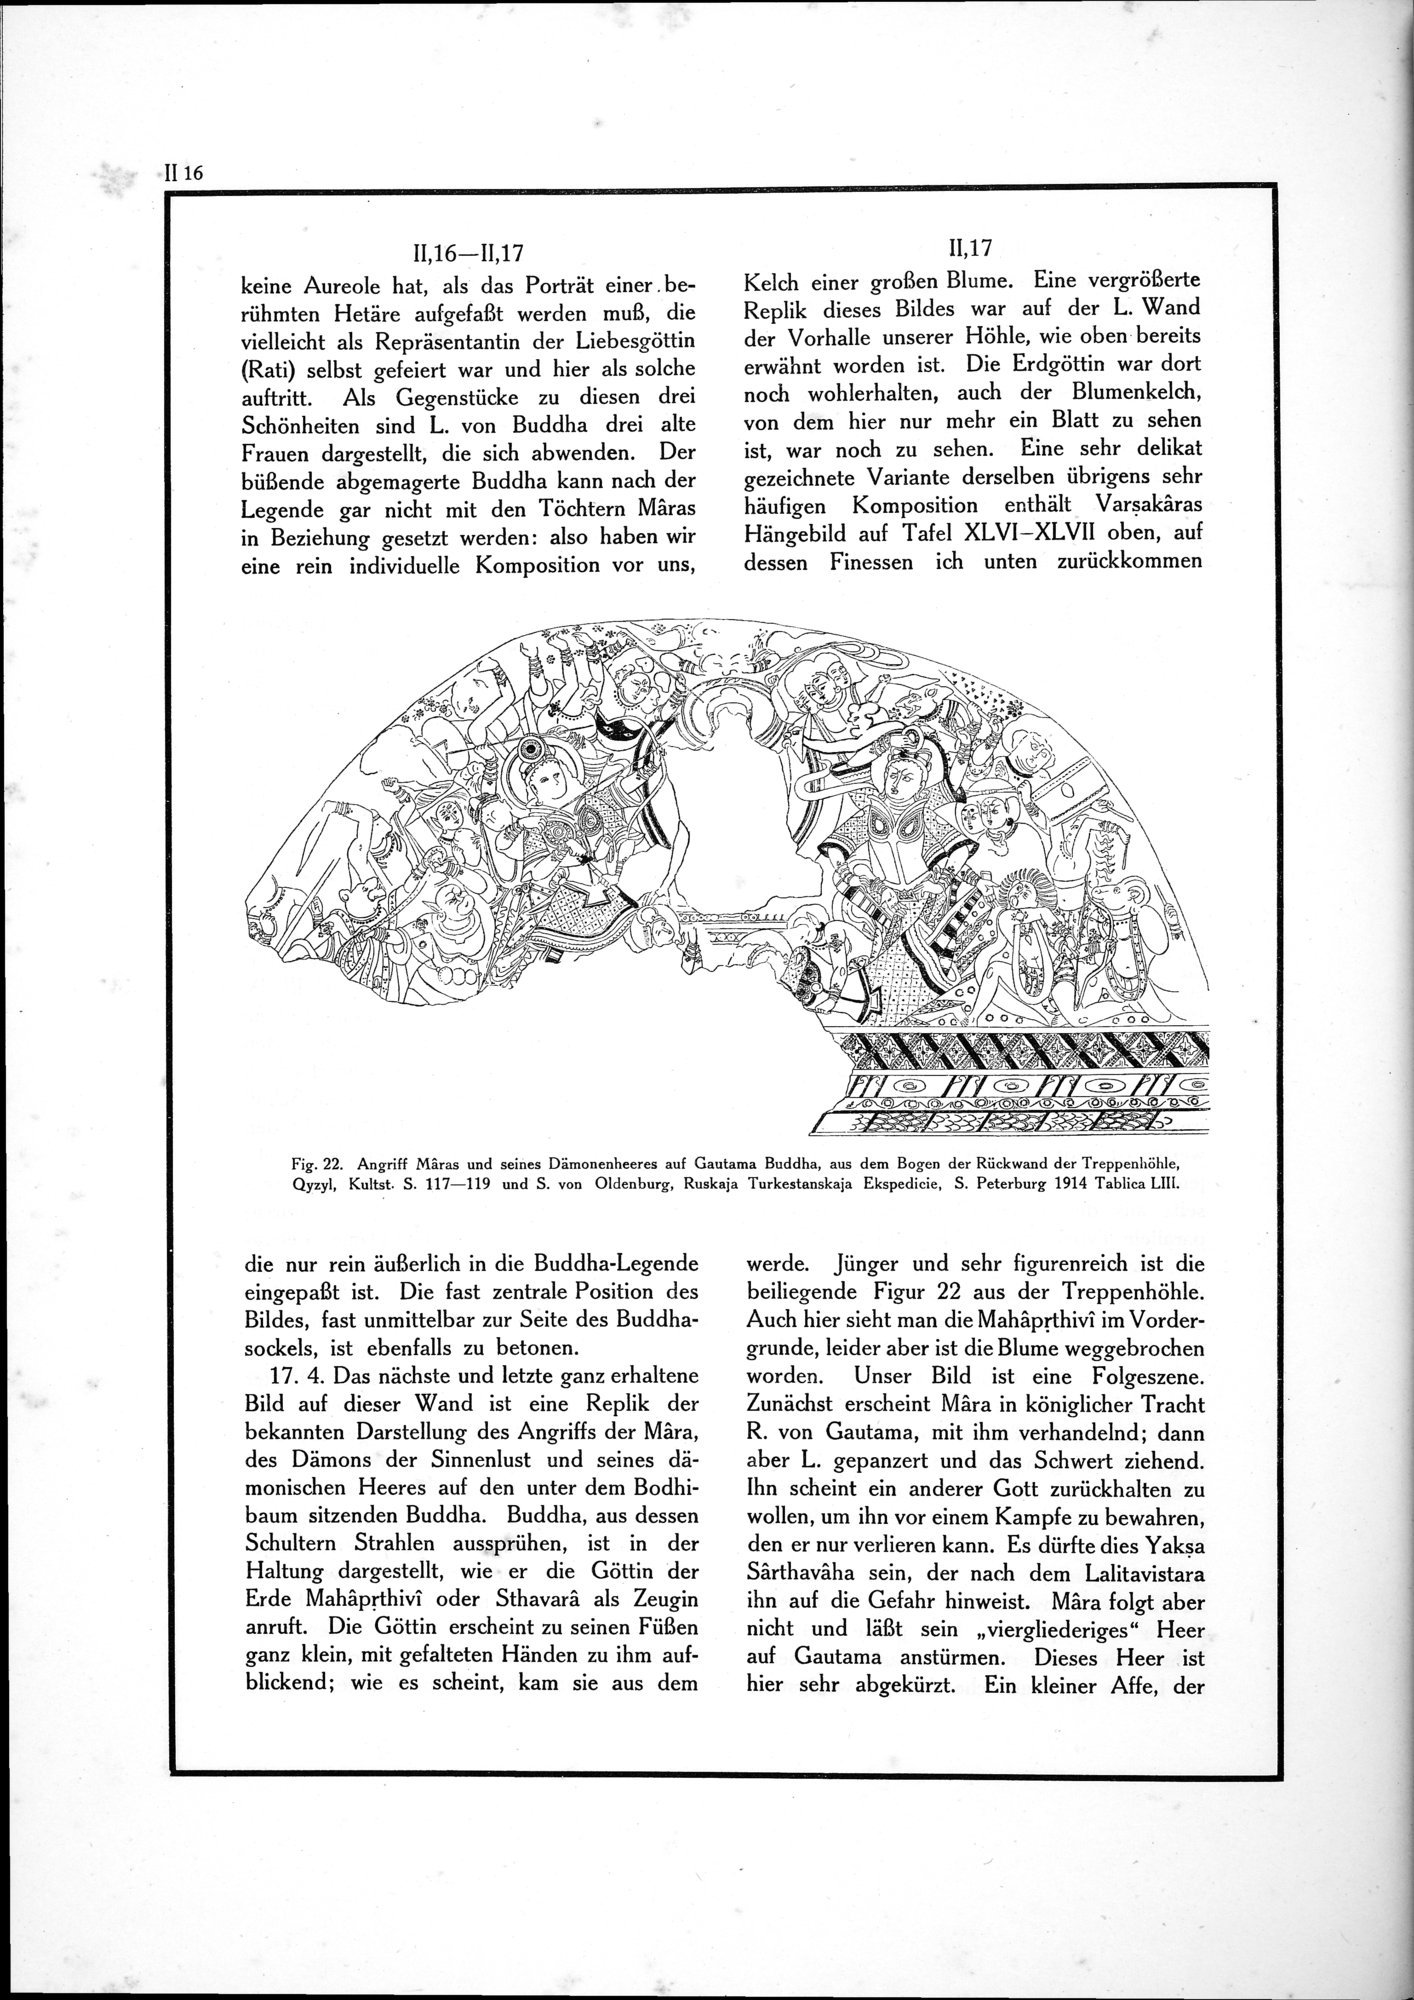 Alt-Kutscha : vol.1 / Page 122 (Grayscale High Resolution Image)